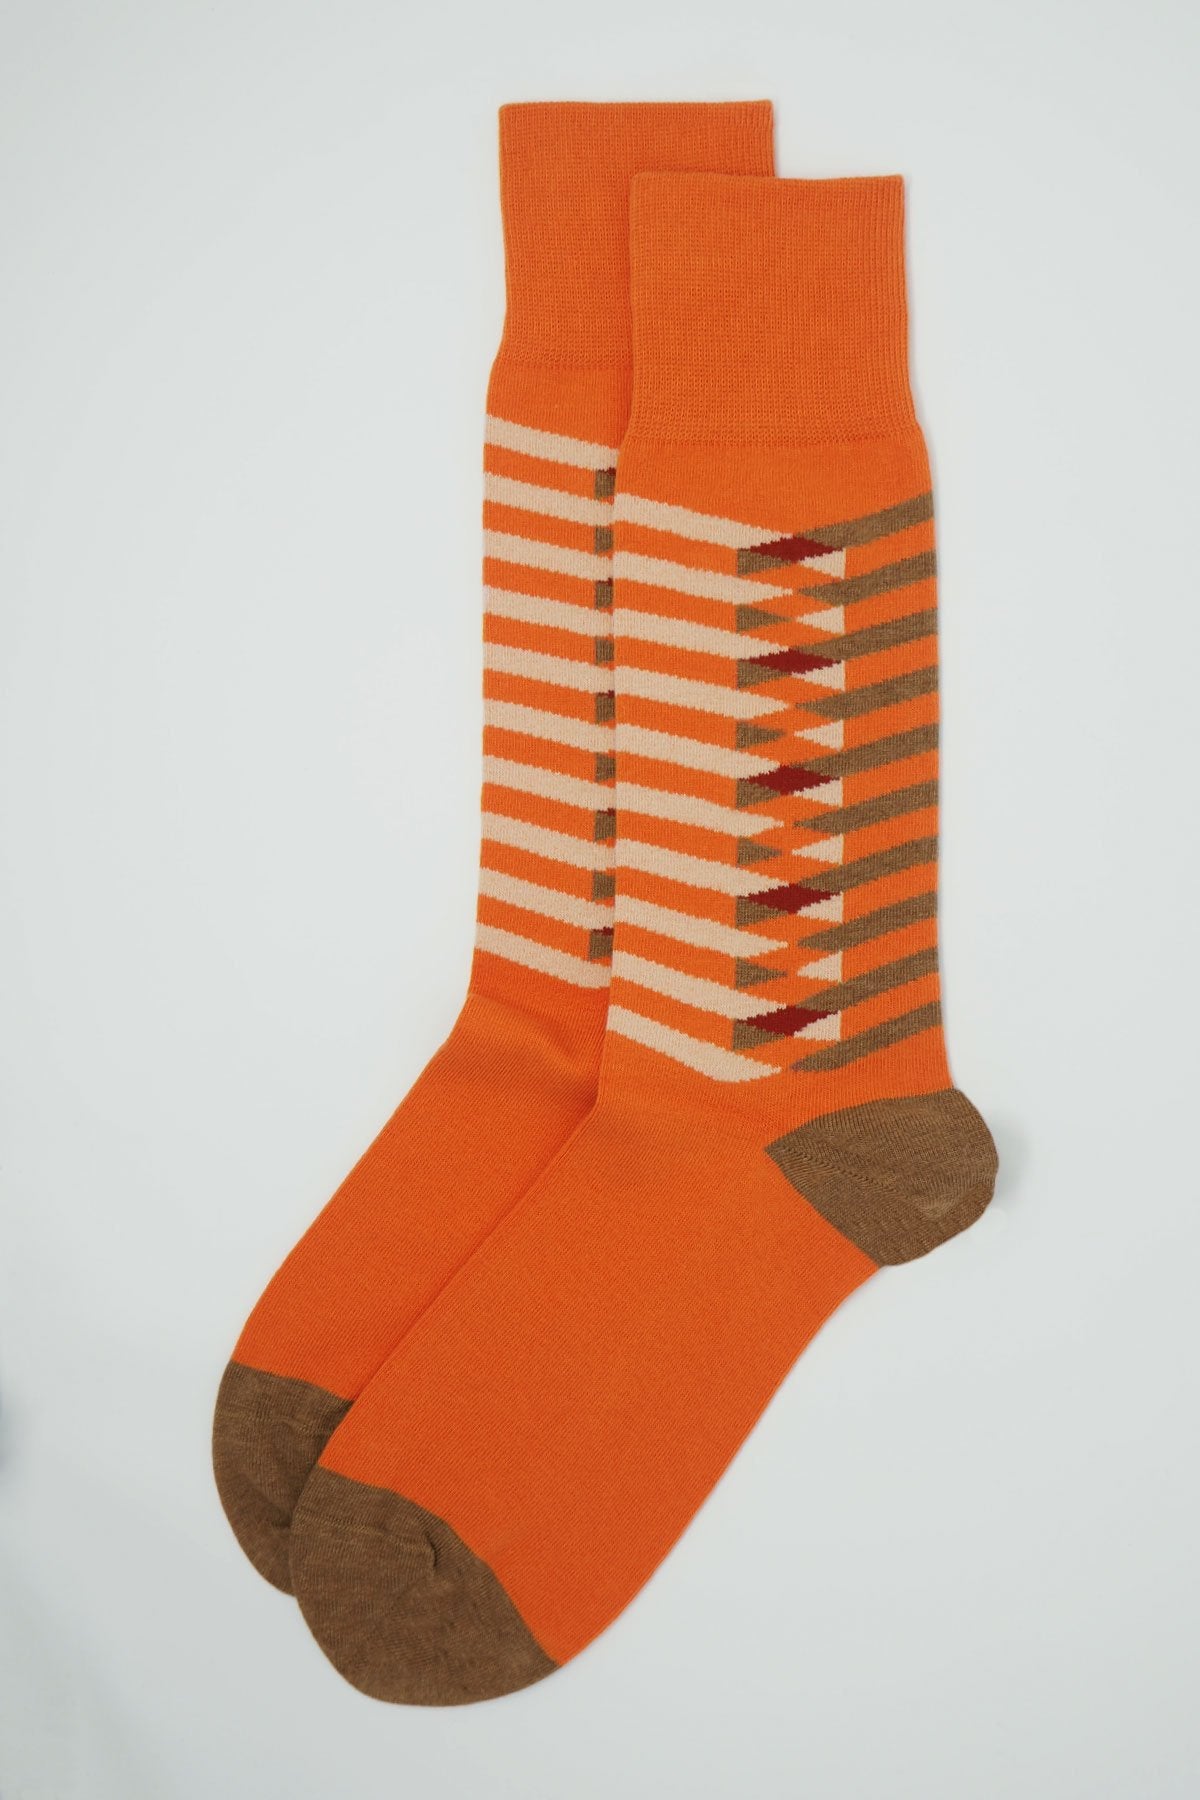 Symmetry Organic Men's Socks - Orange – Peper Harow